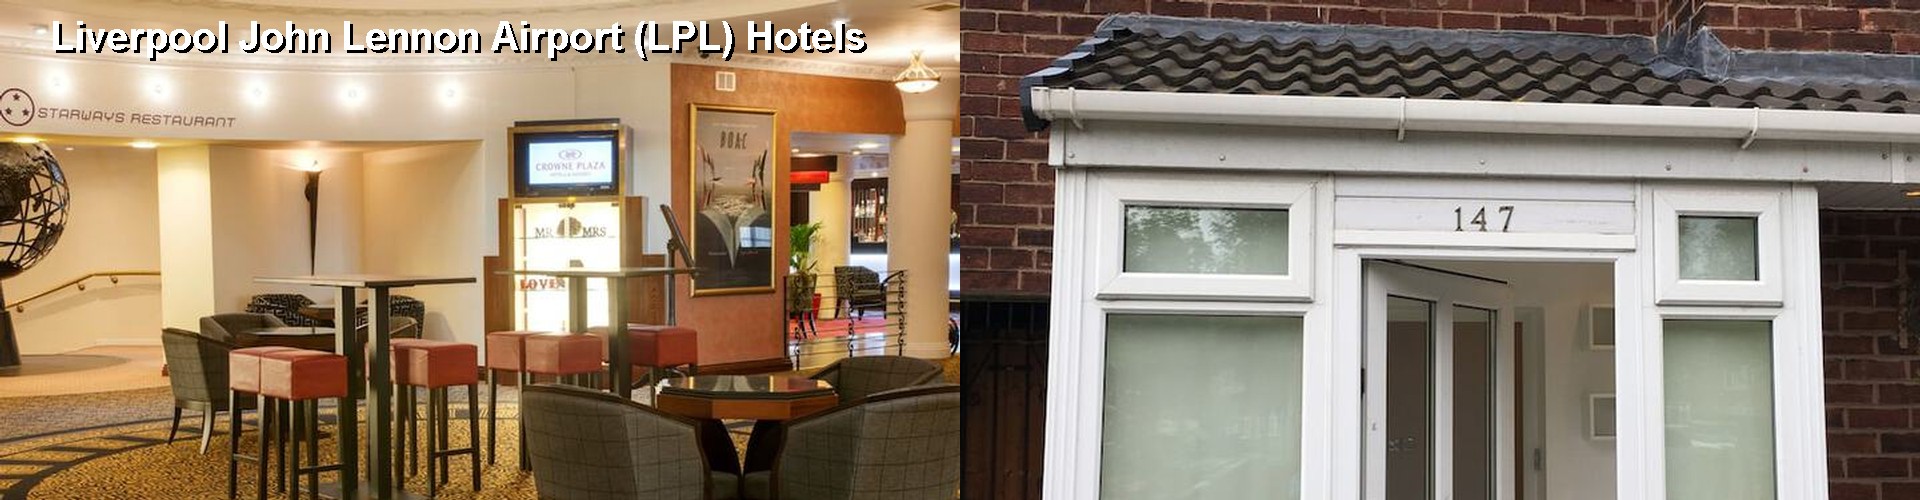 5 Best Hotels near Liverpool John Lennon Airport (LPL)